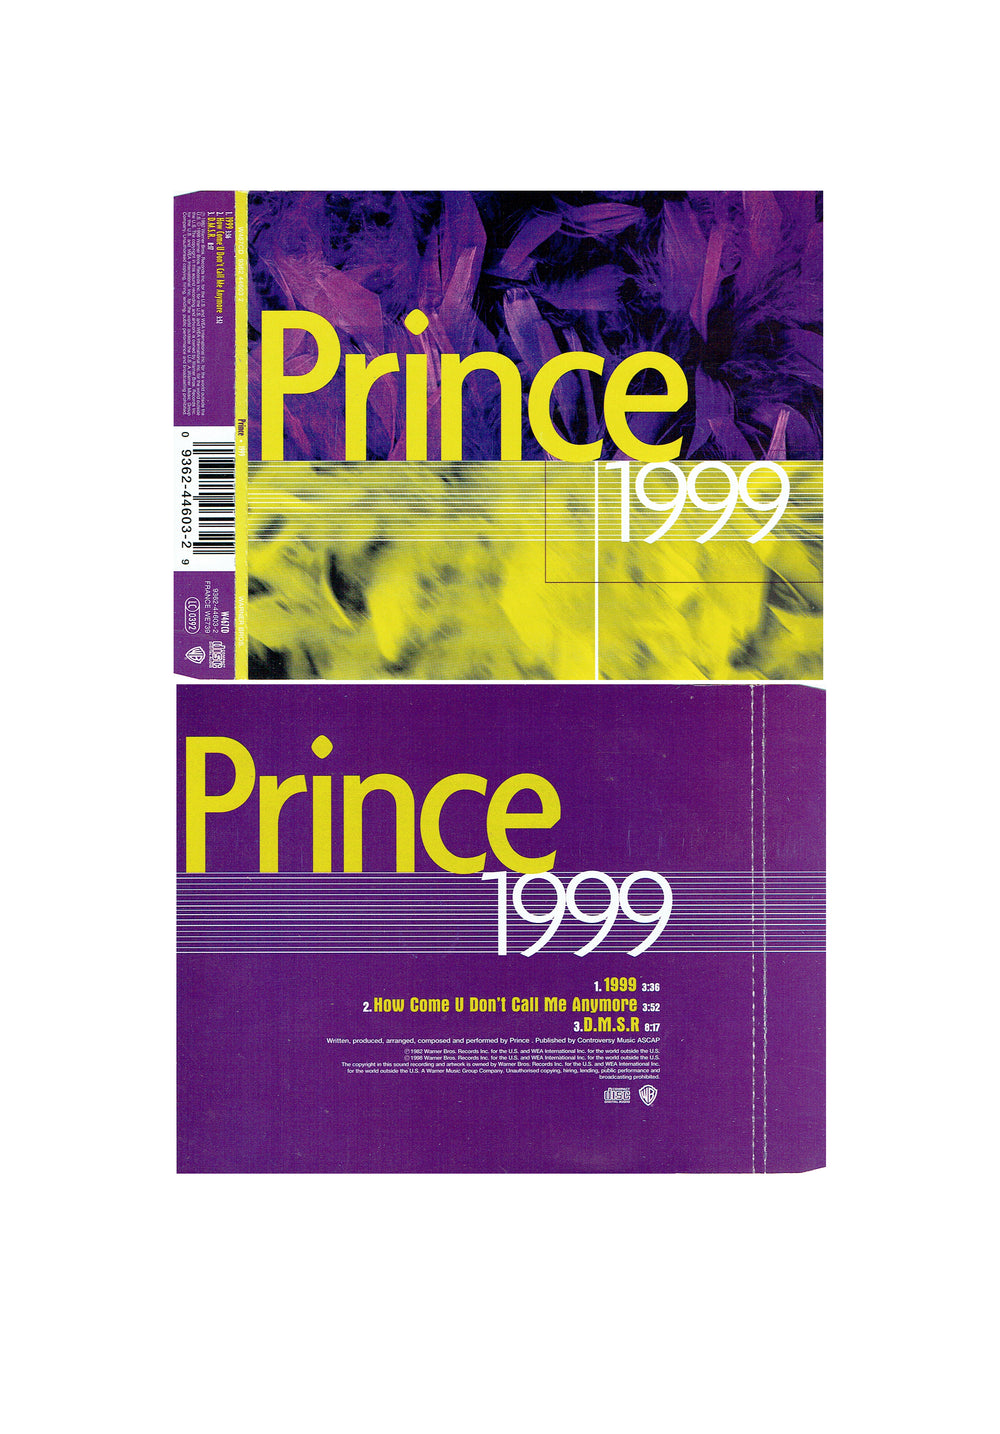 Prince – 1999 How Come U Don't Call Me Anymore? DMSR CD Single RE EU Preloved: 1998*